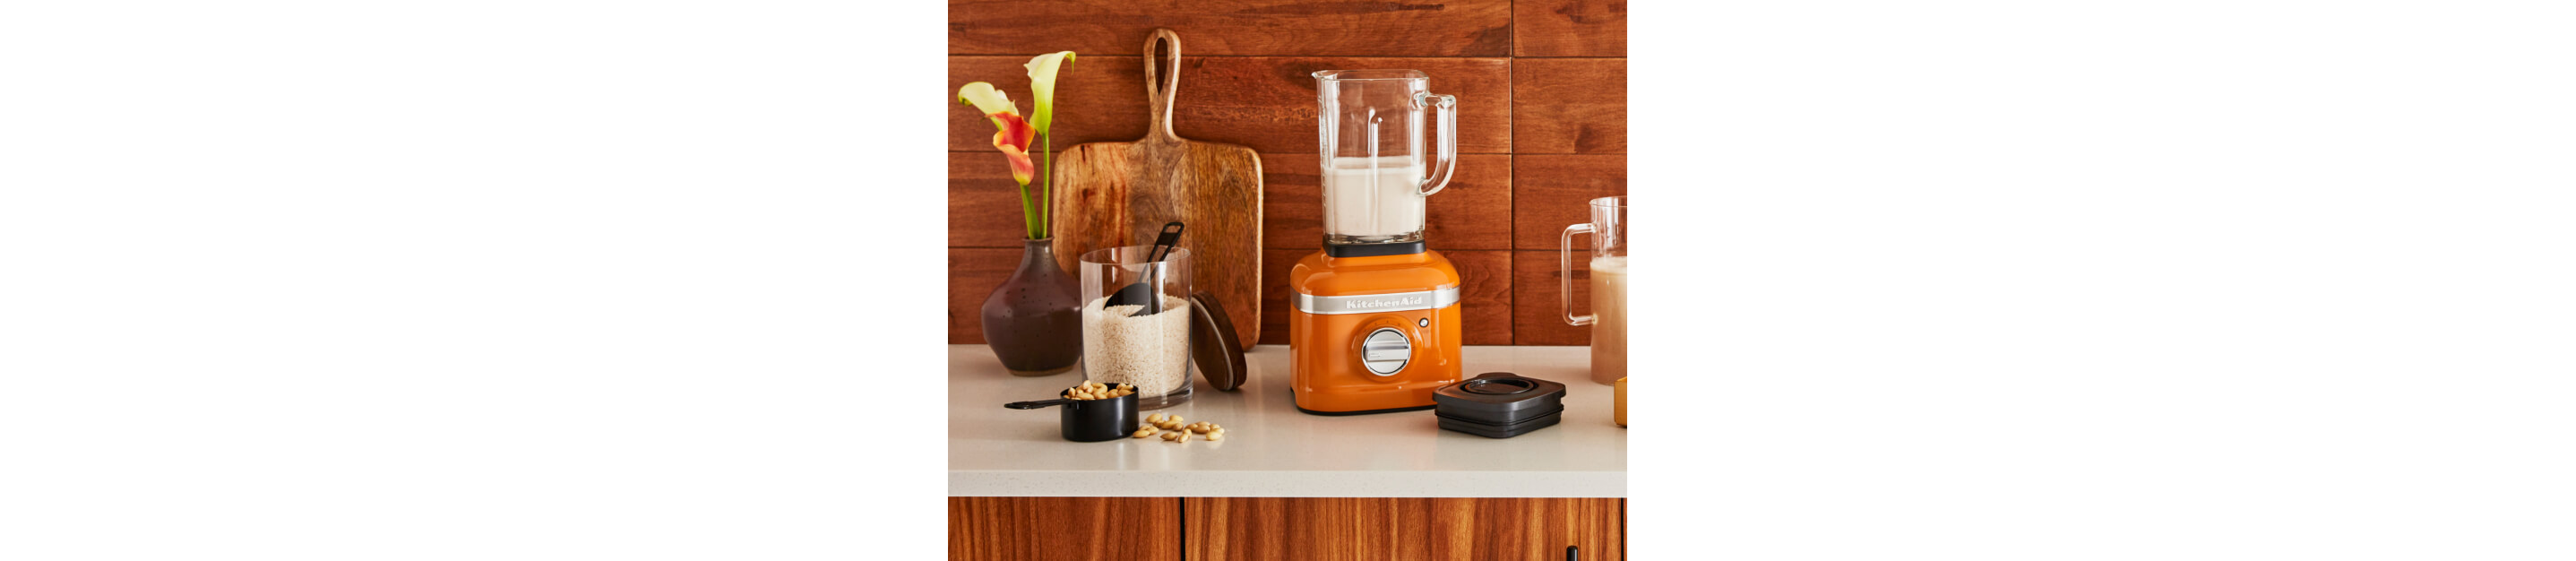 KitchenAid® Blender i honung mot en träsensplash